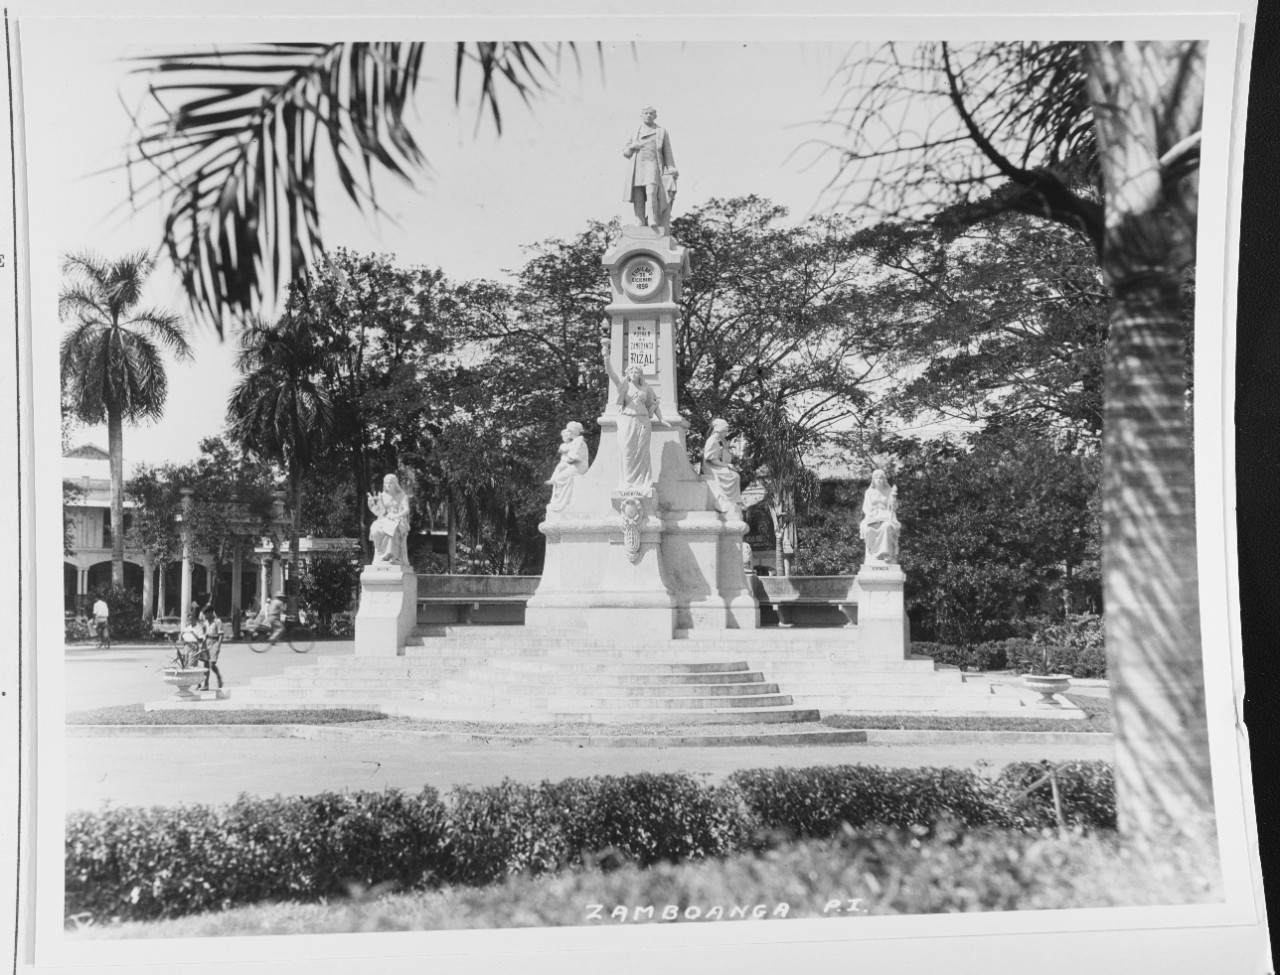 Monument dedicated to Jose Rizal (1861-1896) in Zamboanga, Philippine Islands.